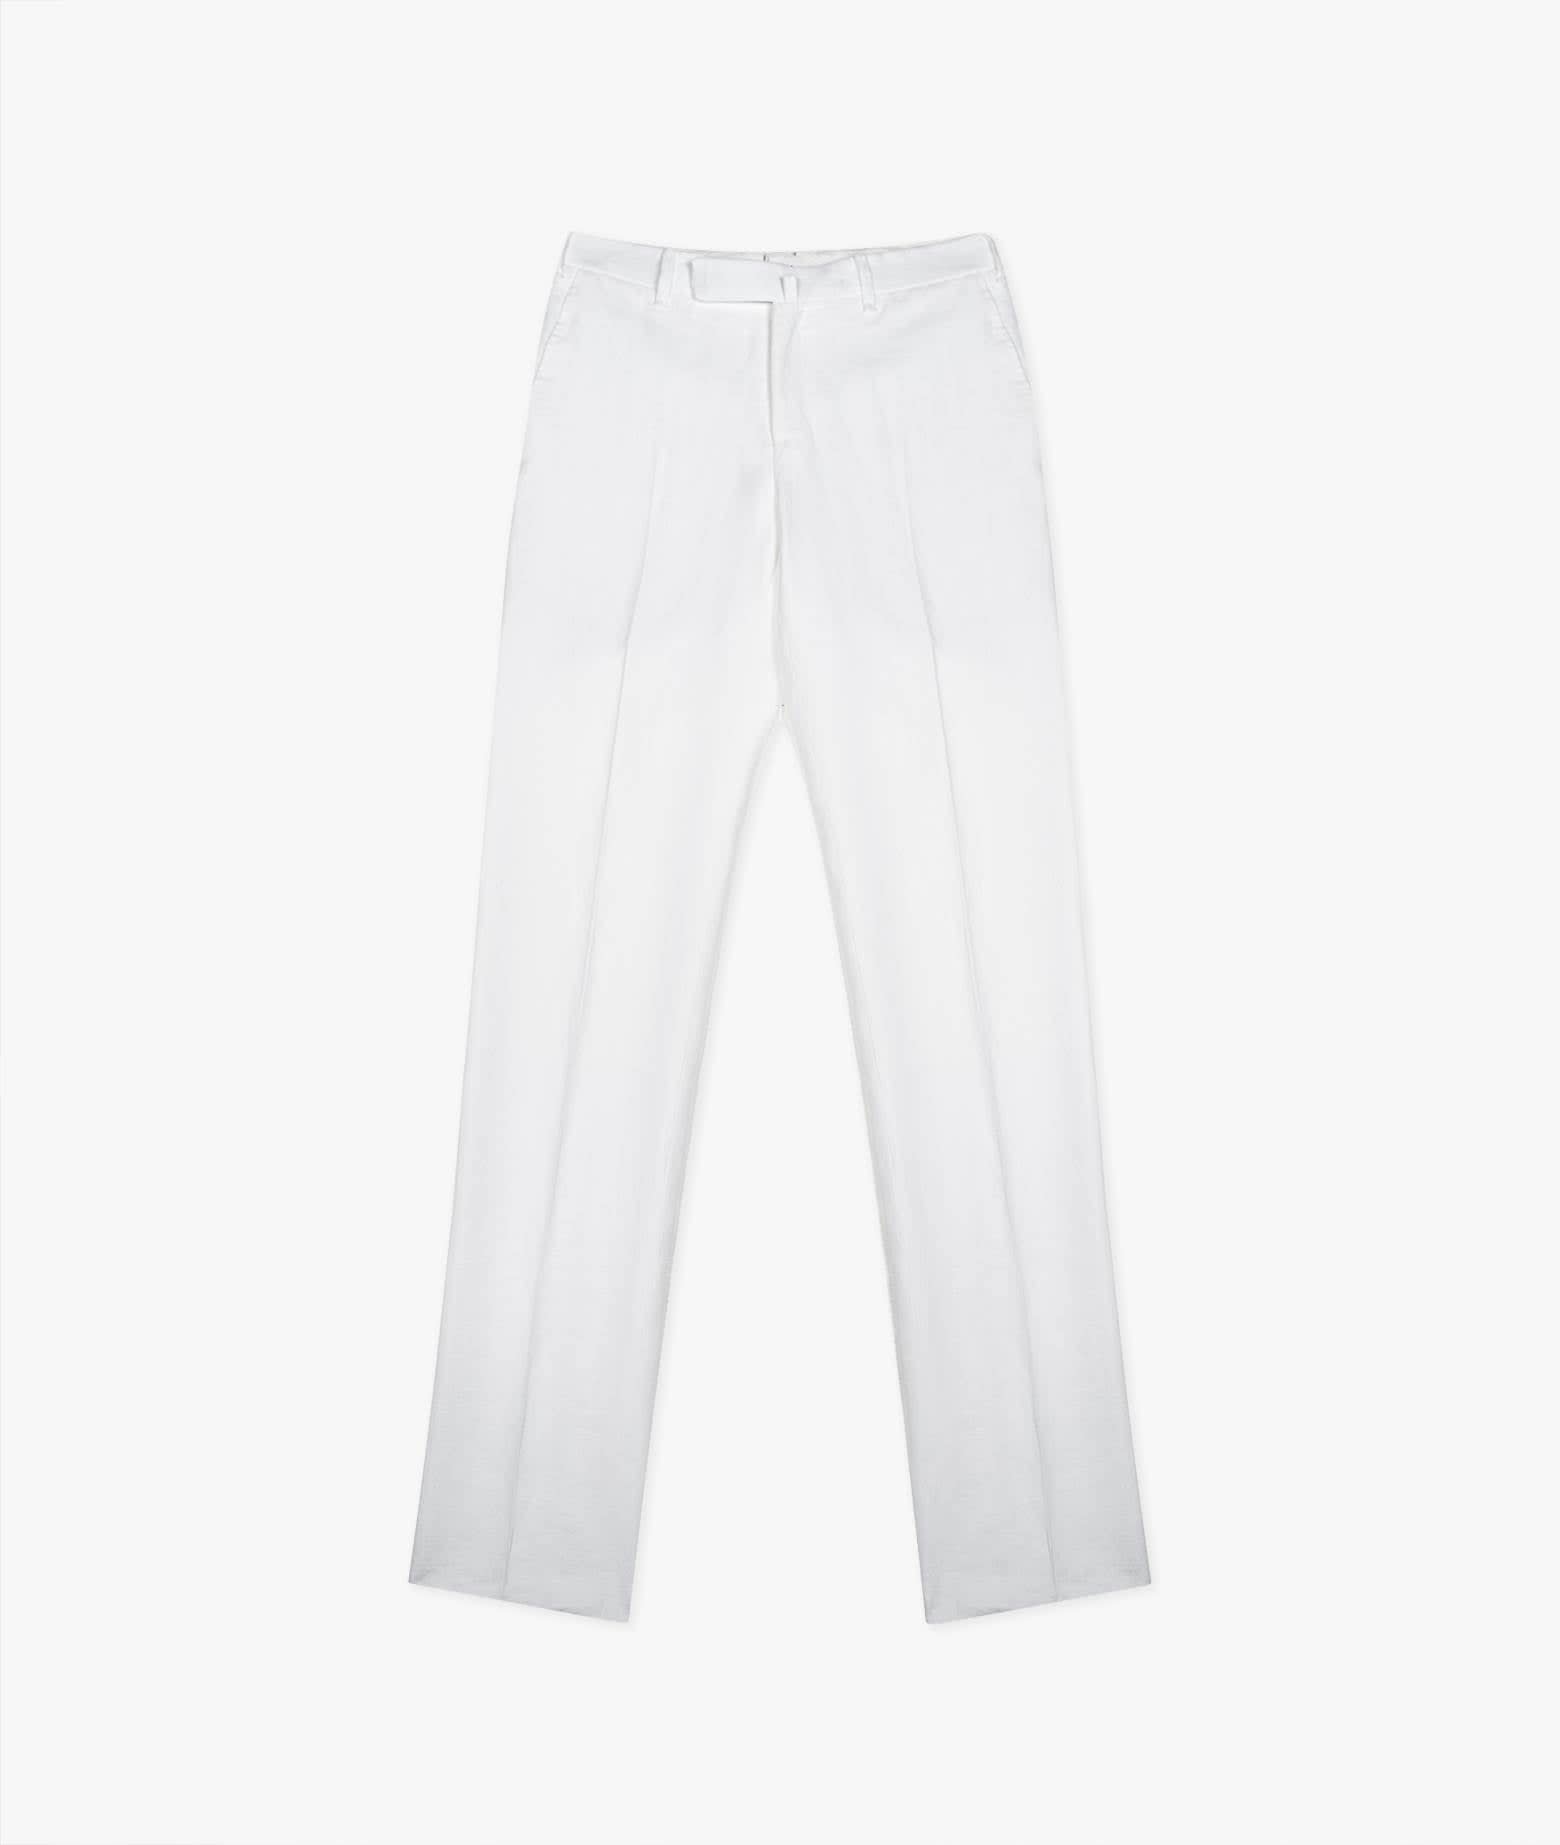 Handmade Trousers portofino Pants